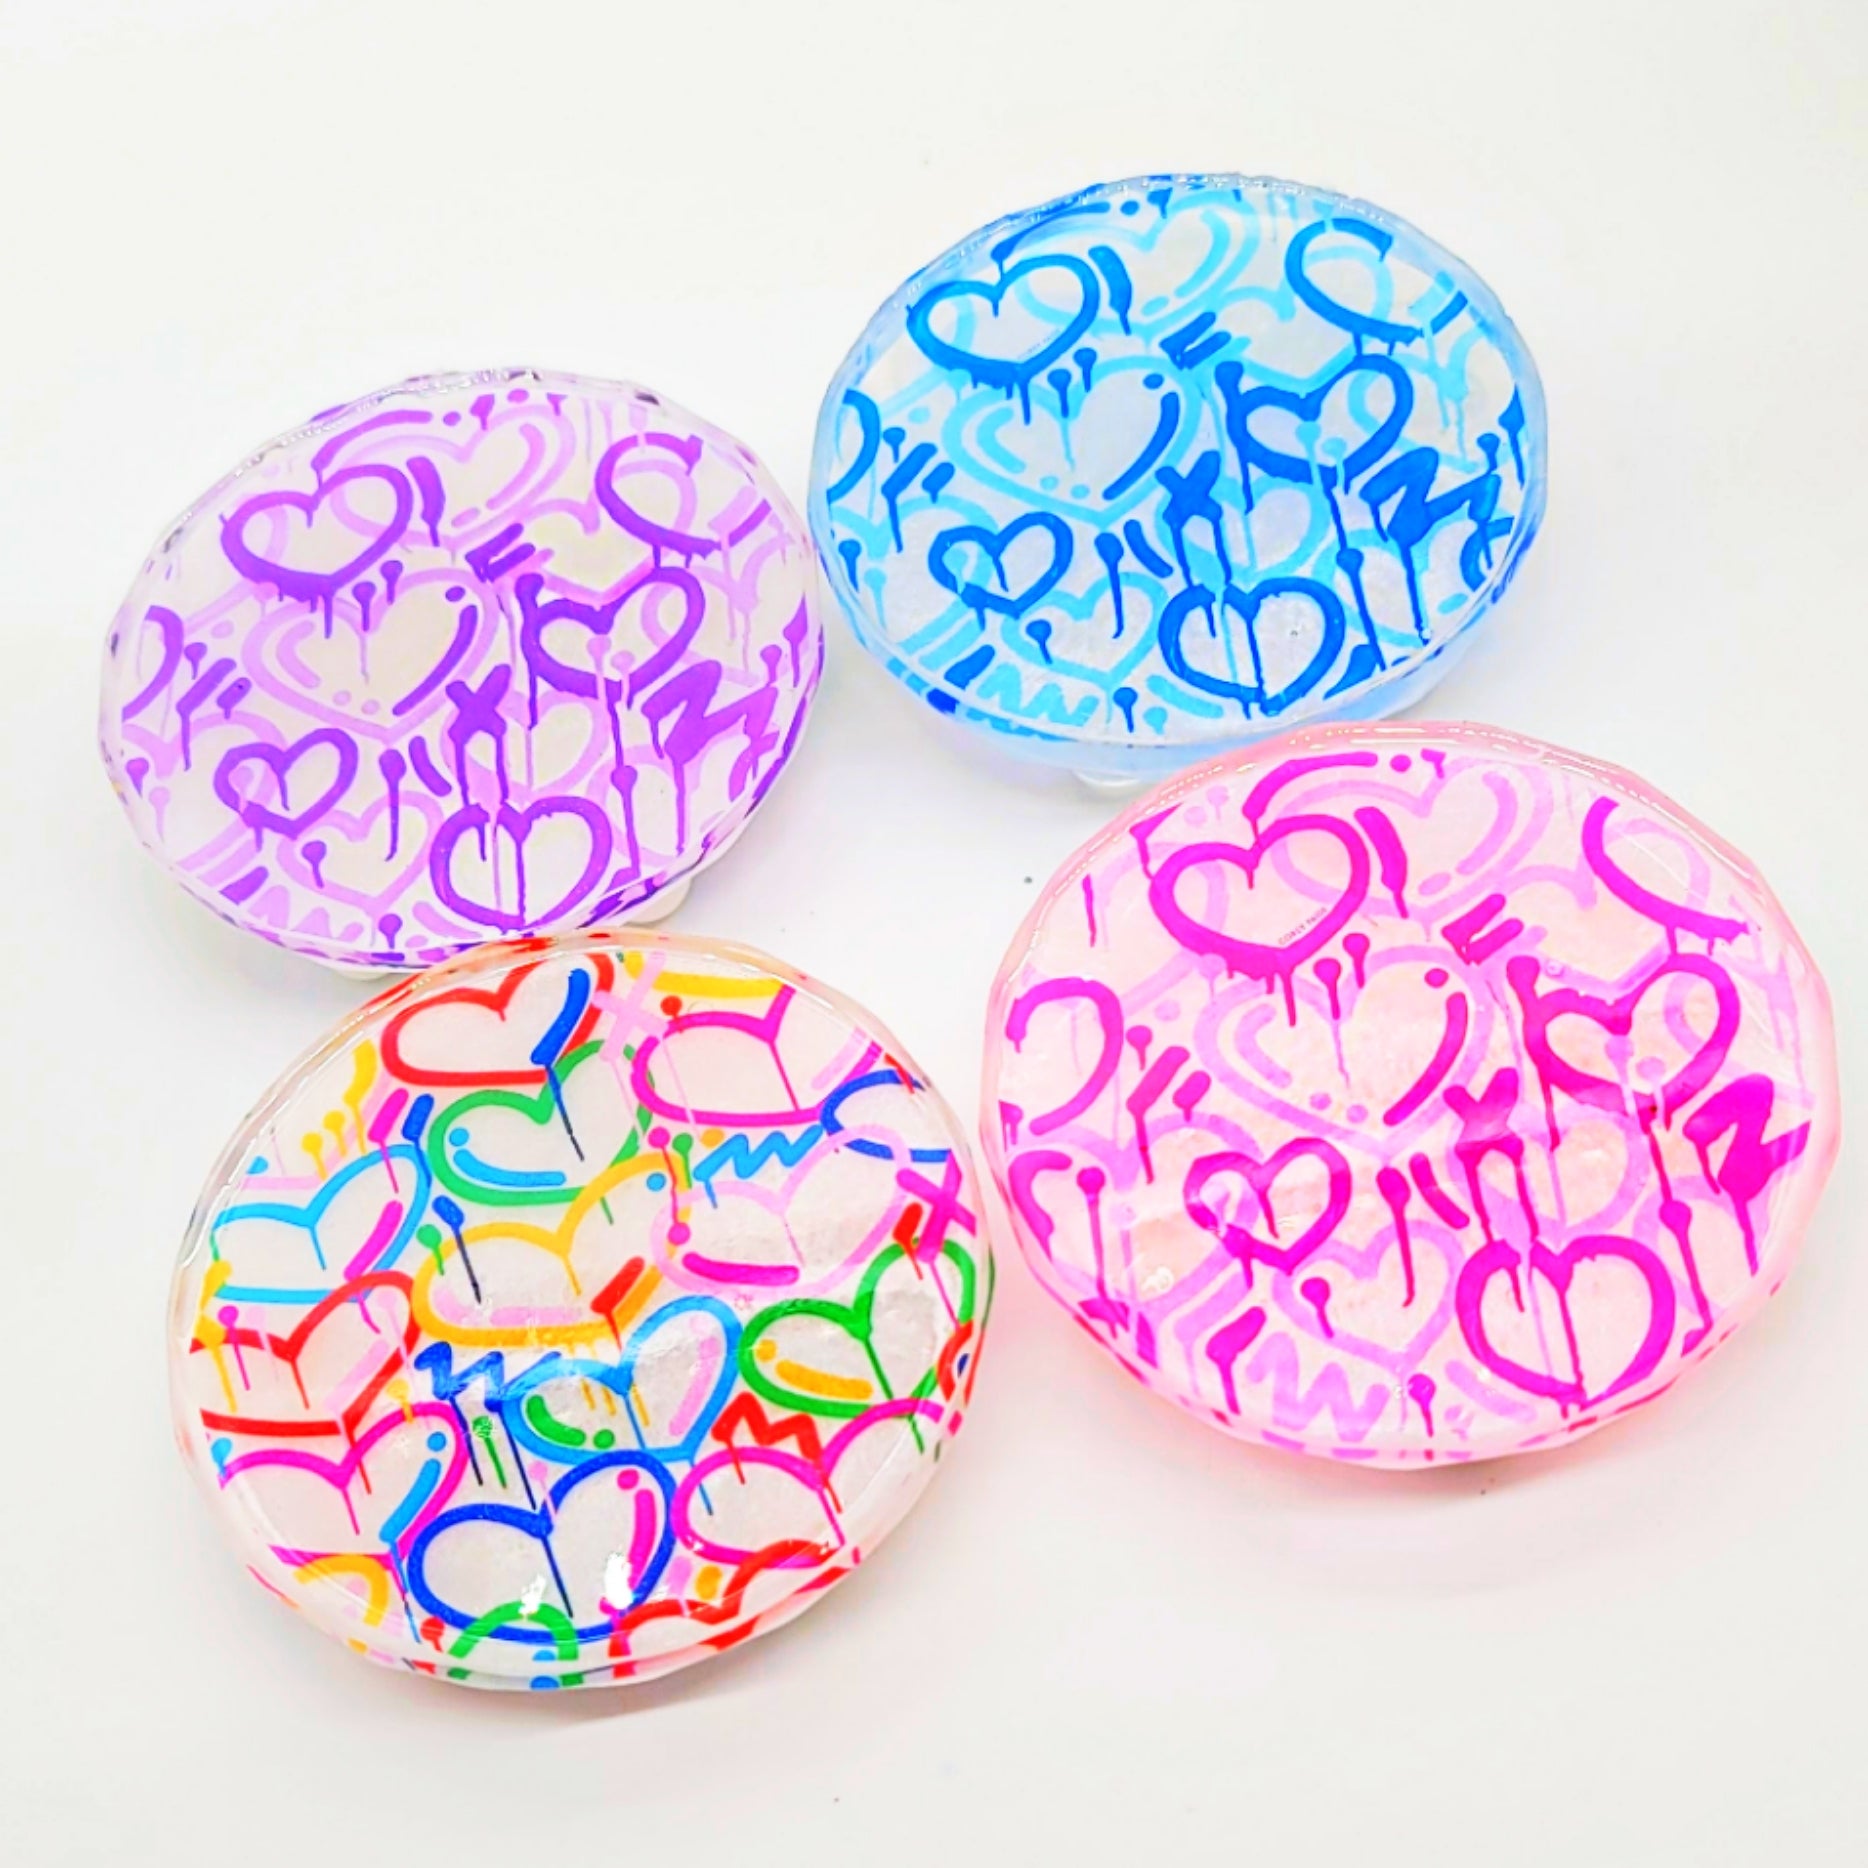 Corey Paige x Happi Crafts Coasters